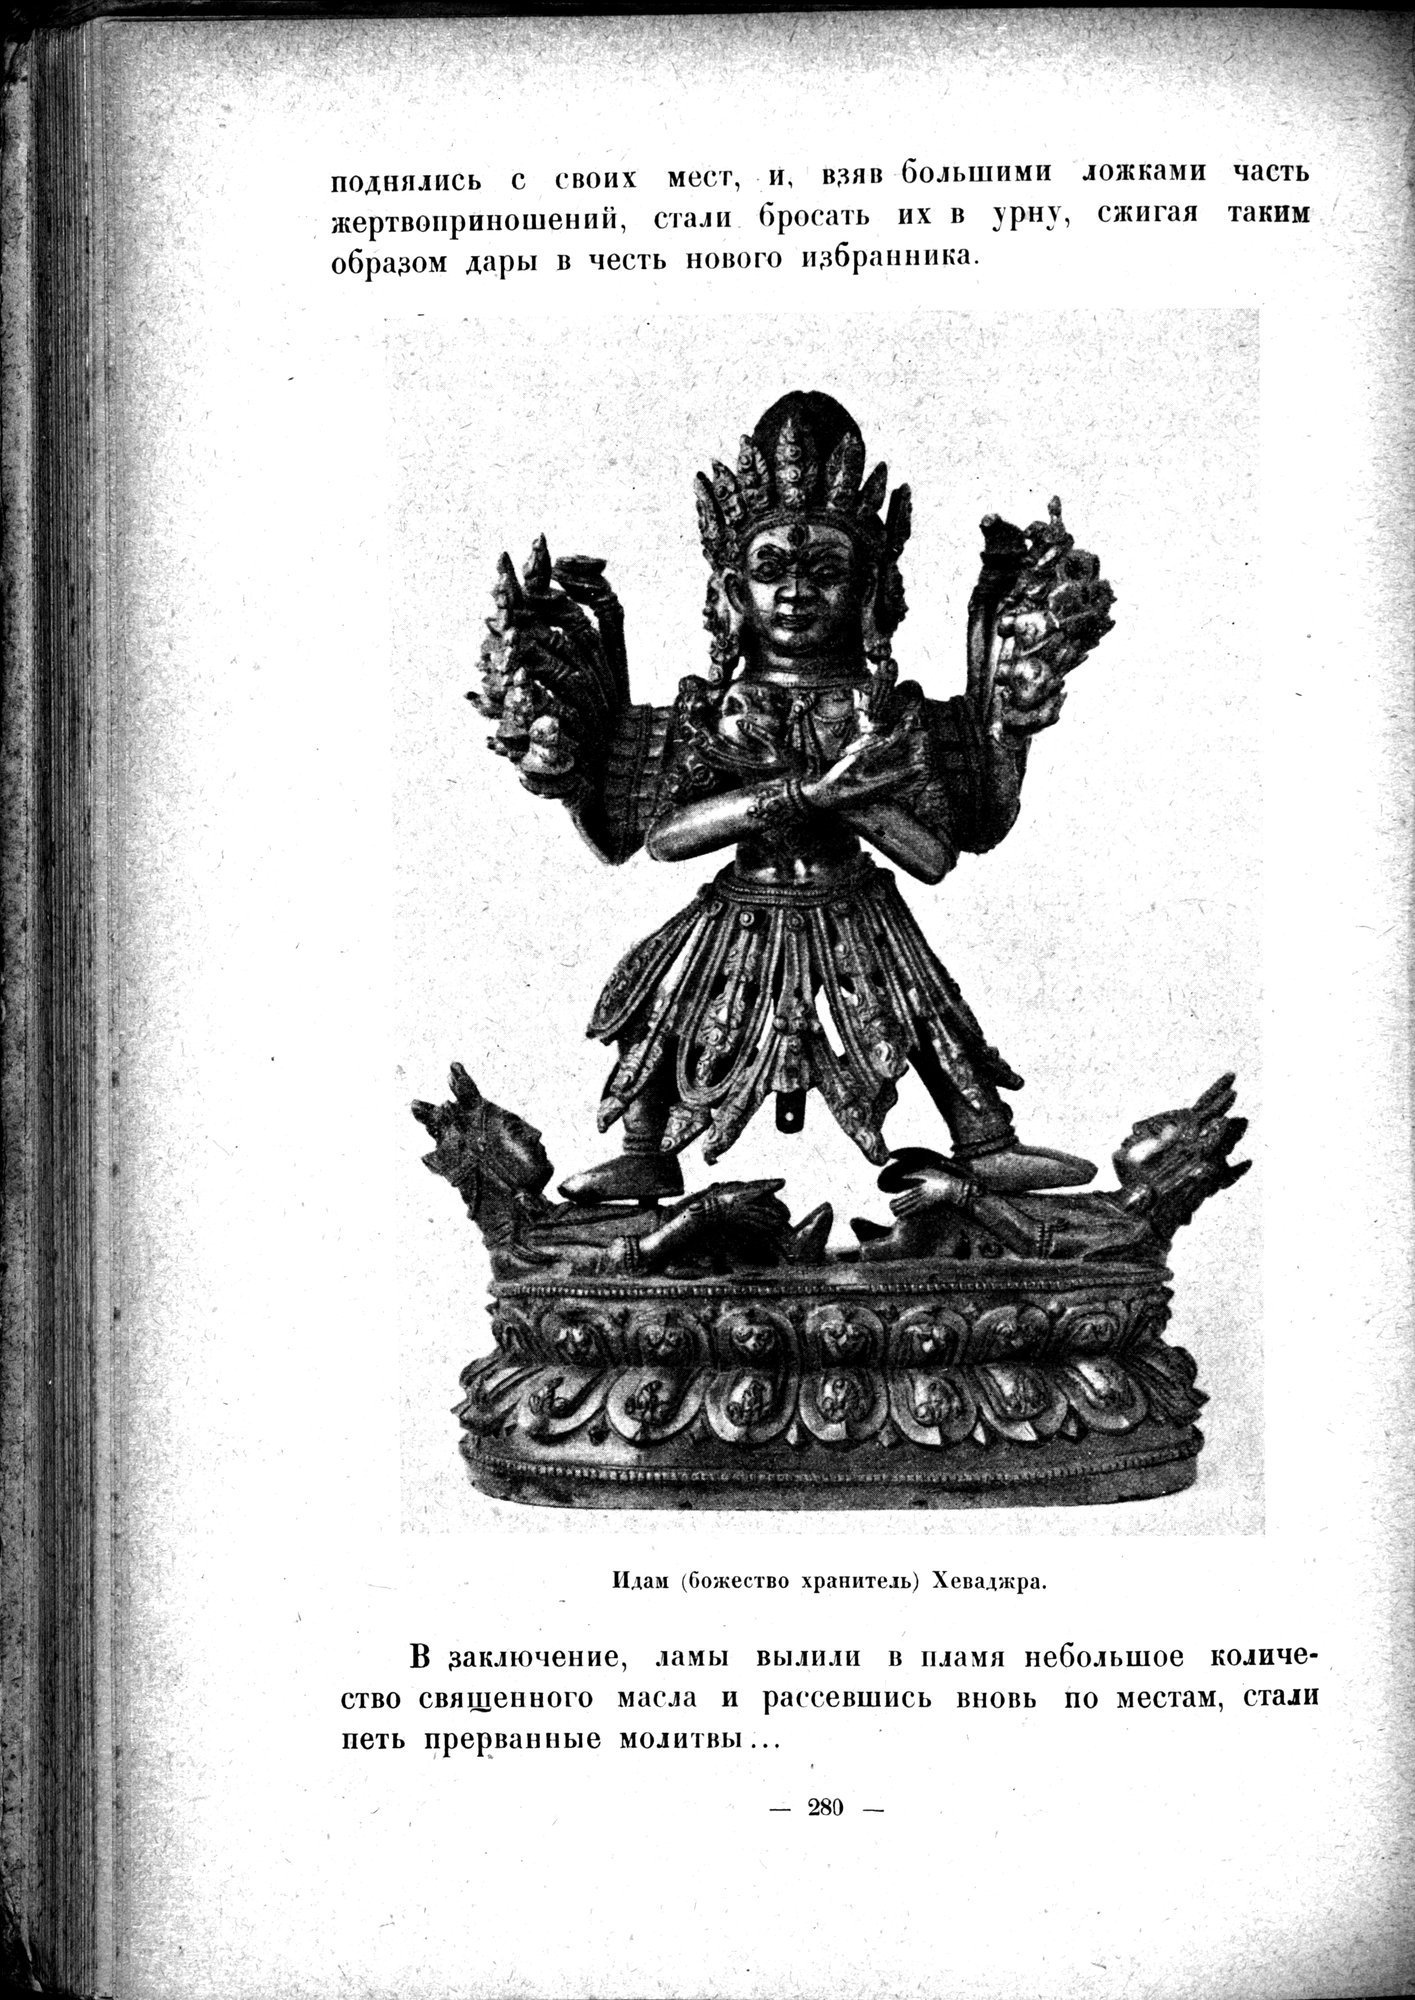 Mongoliya i Amdo i mertby gorod Khara-Khoto : vol.1 / Page 330 (Grayscale High Resolution Image)